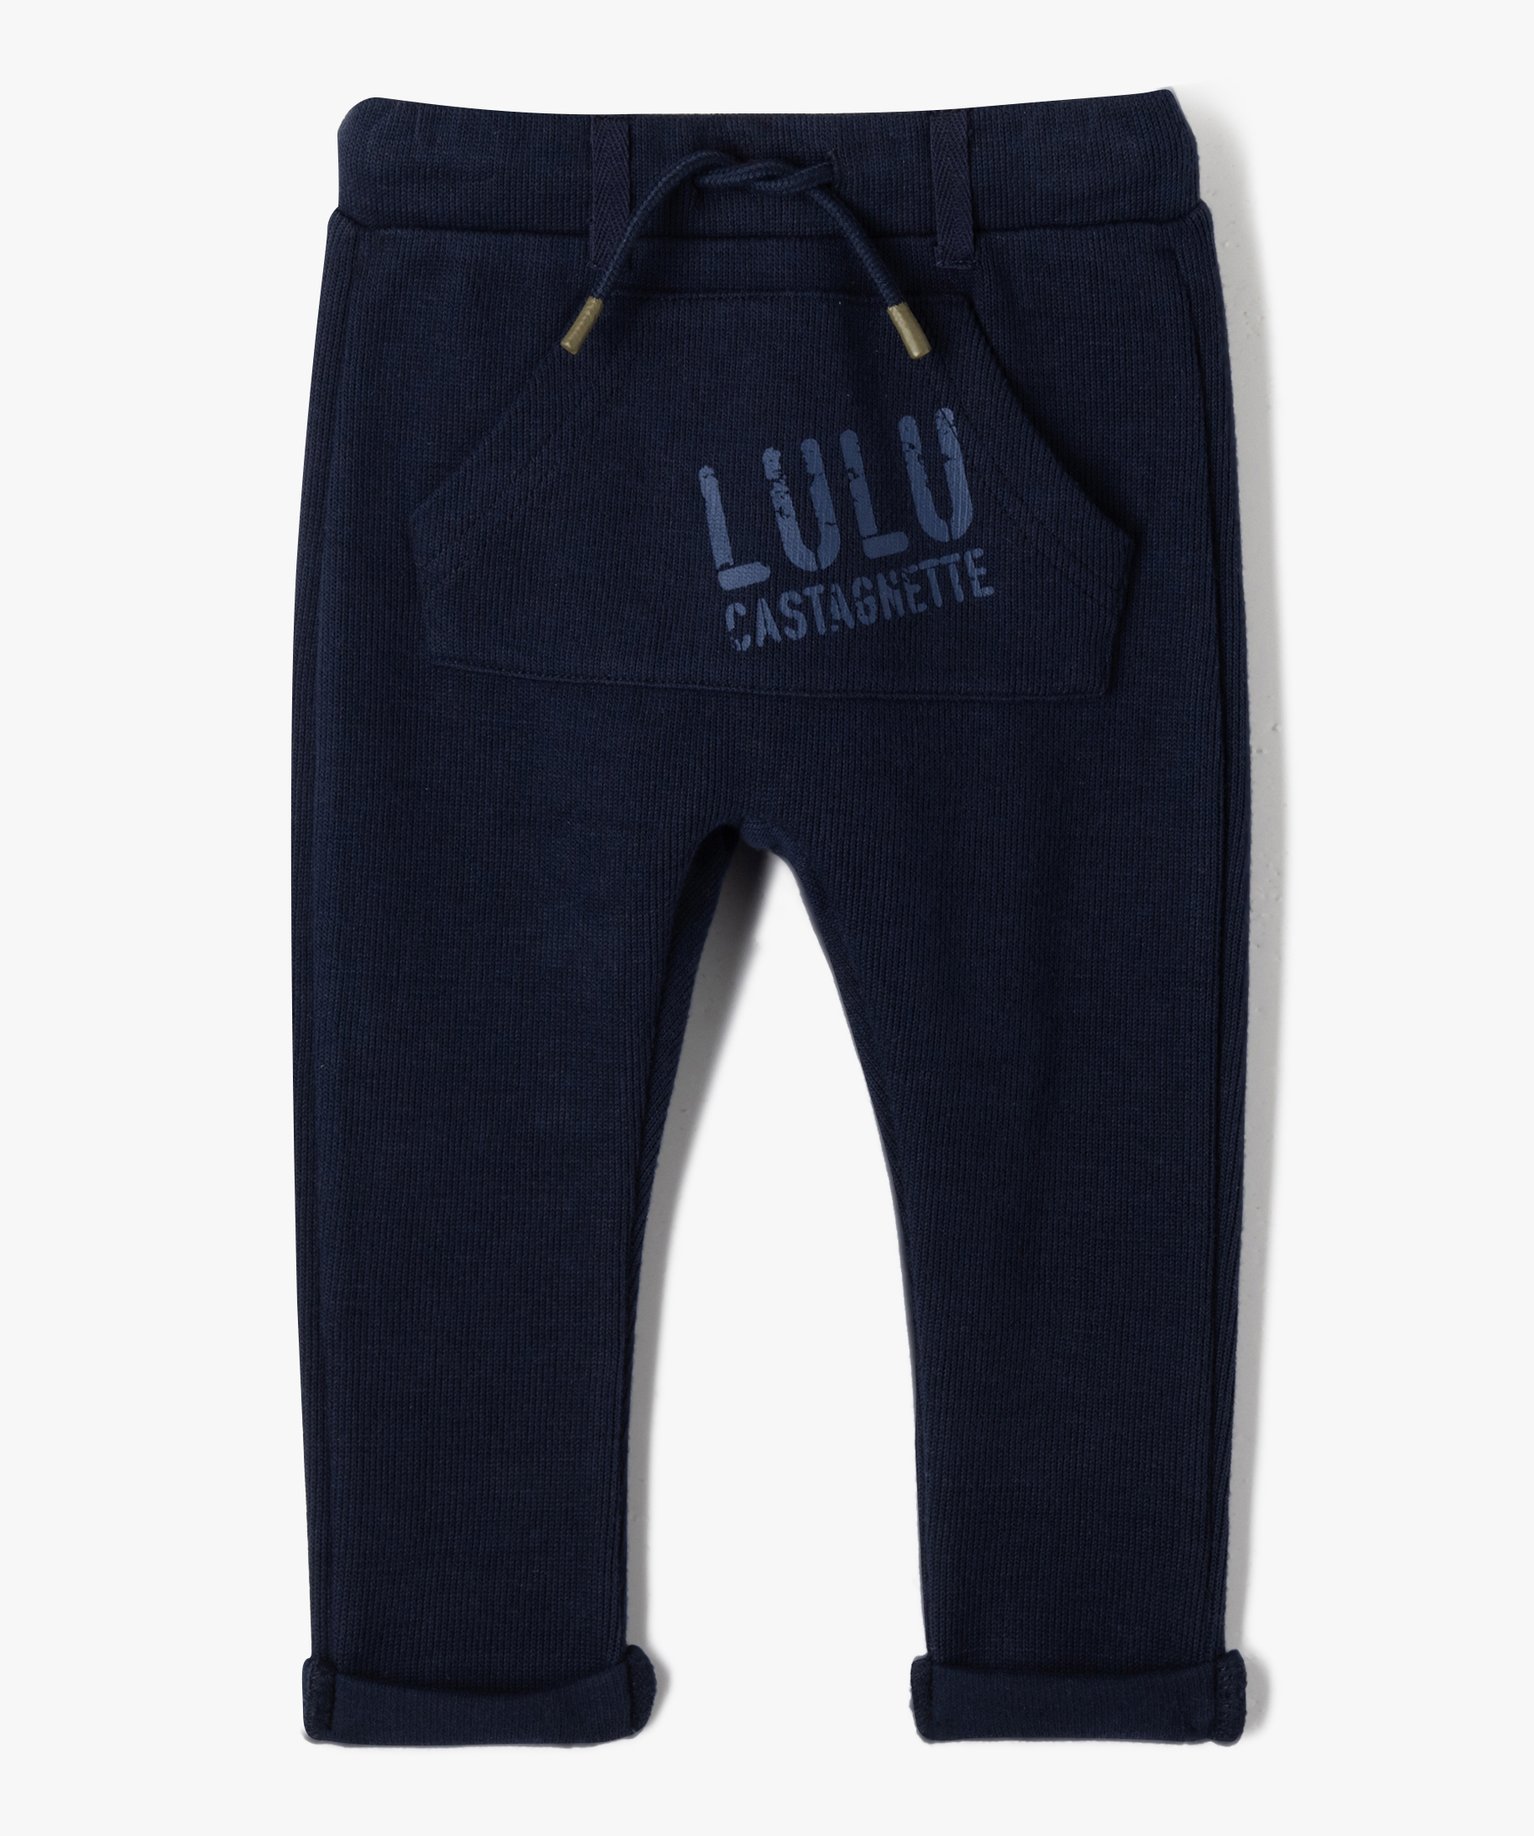 pantalon bebe garcon en maille - lulucastagnette bleu